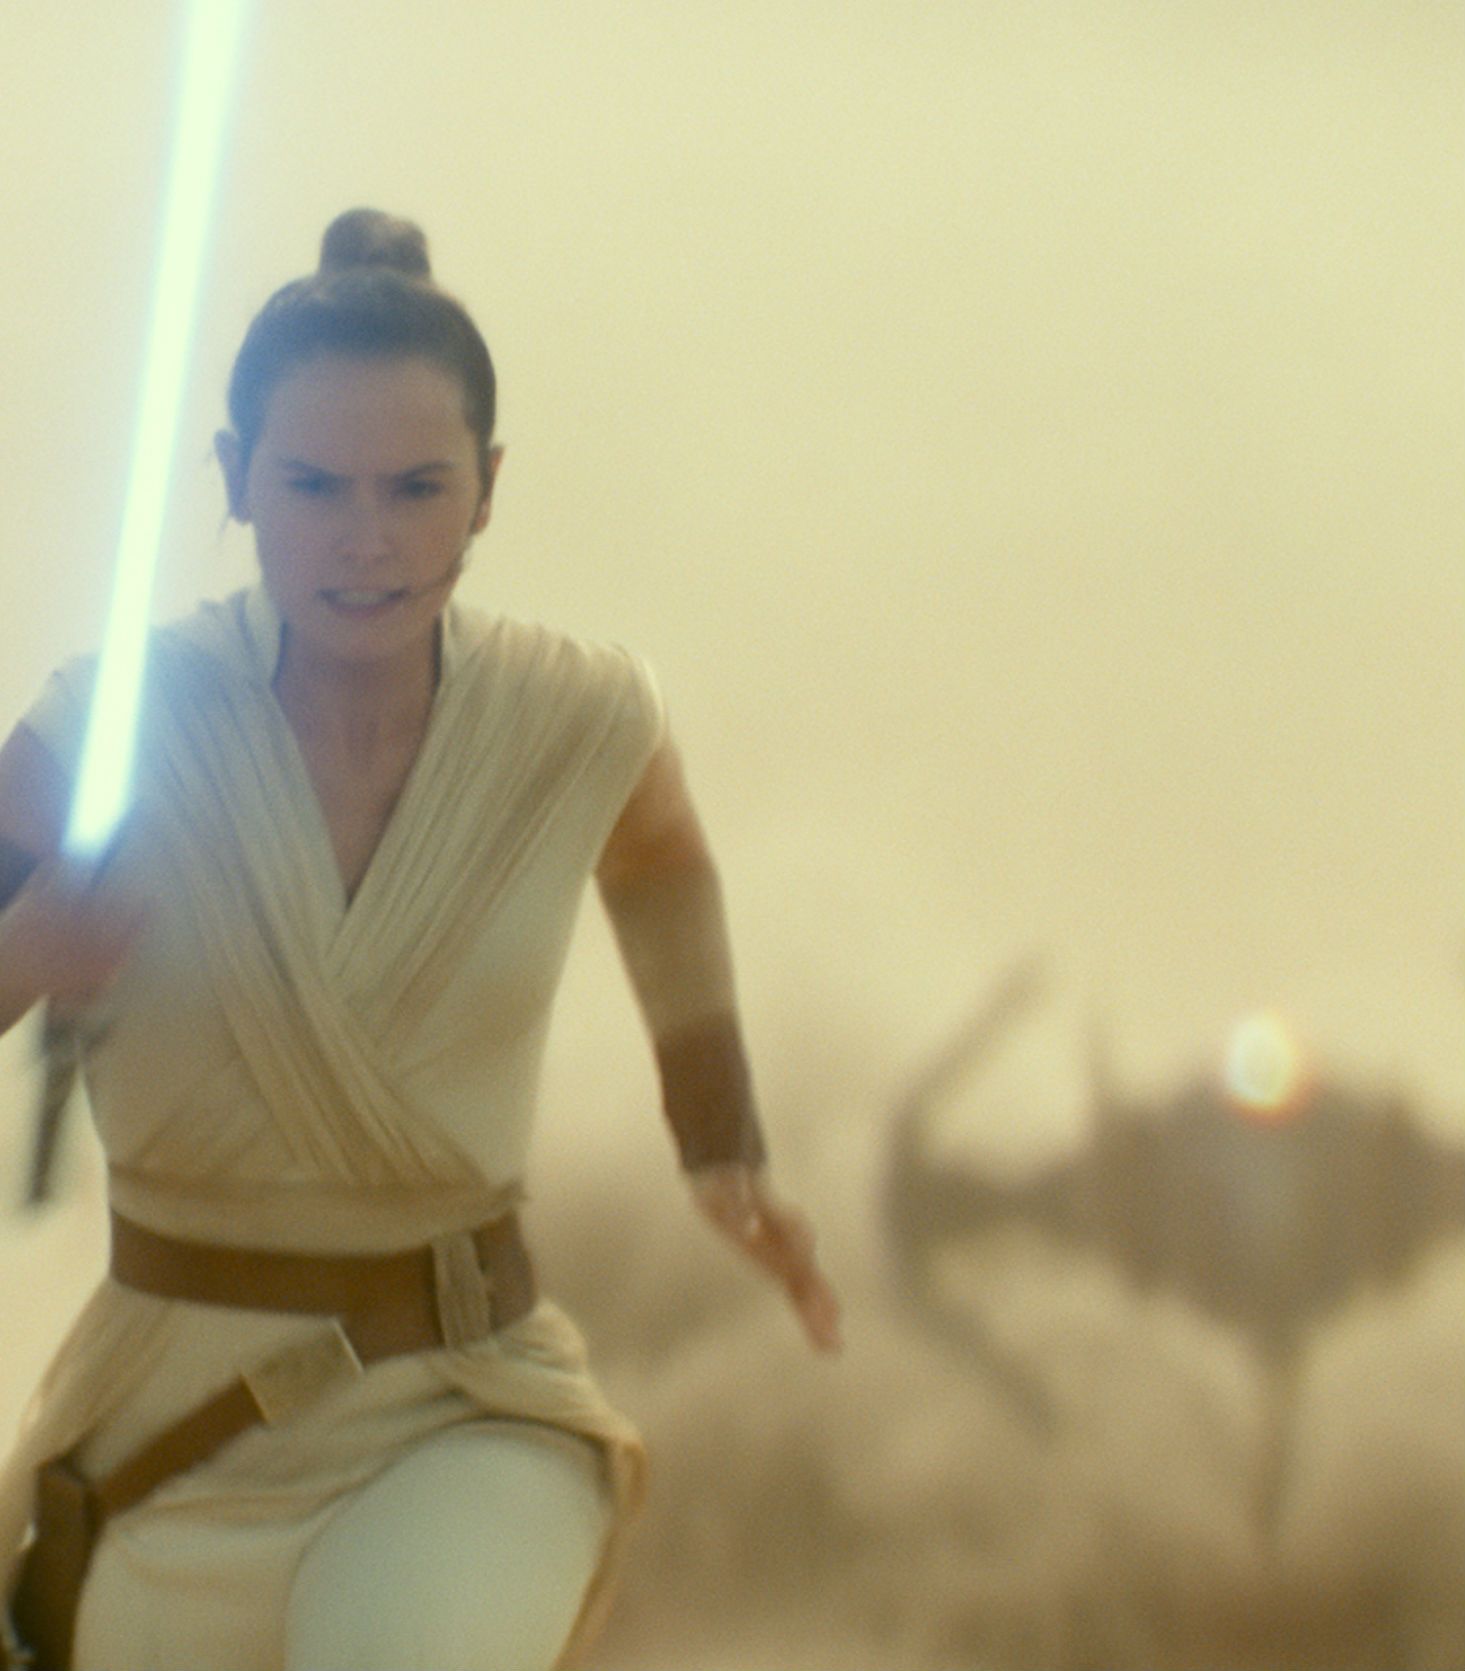 Star Wars The Rise of Skywalker Trailer - TIE Interceptor Vertical